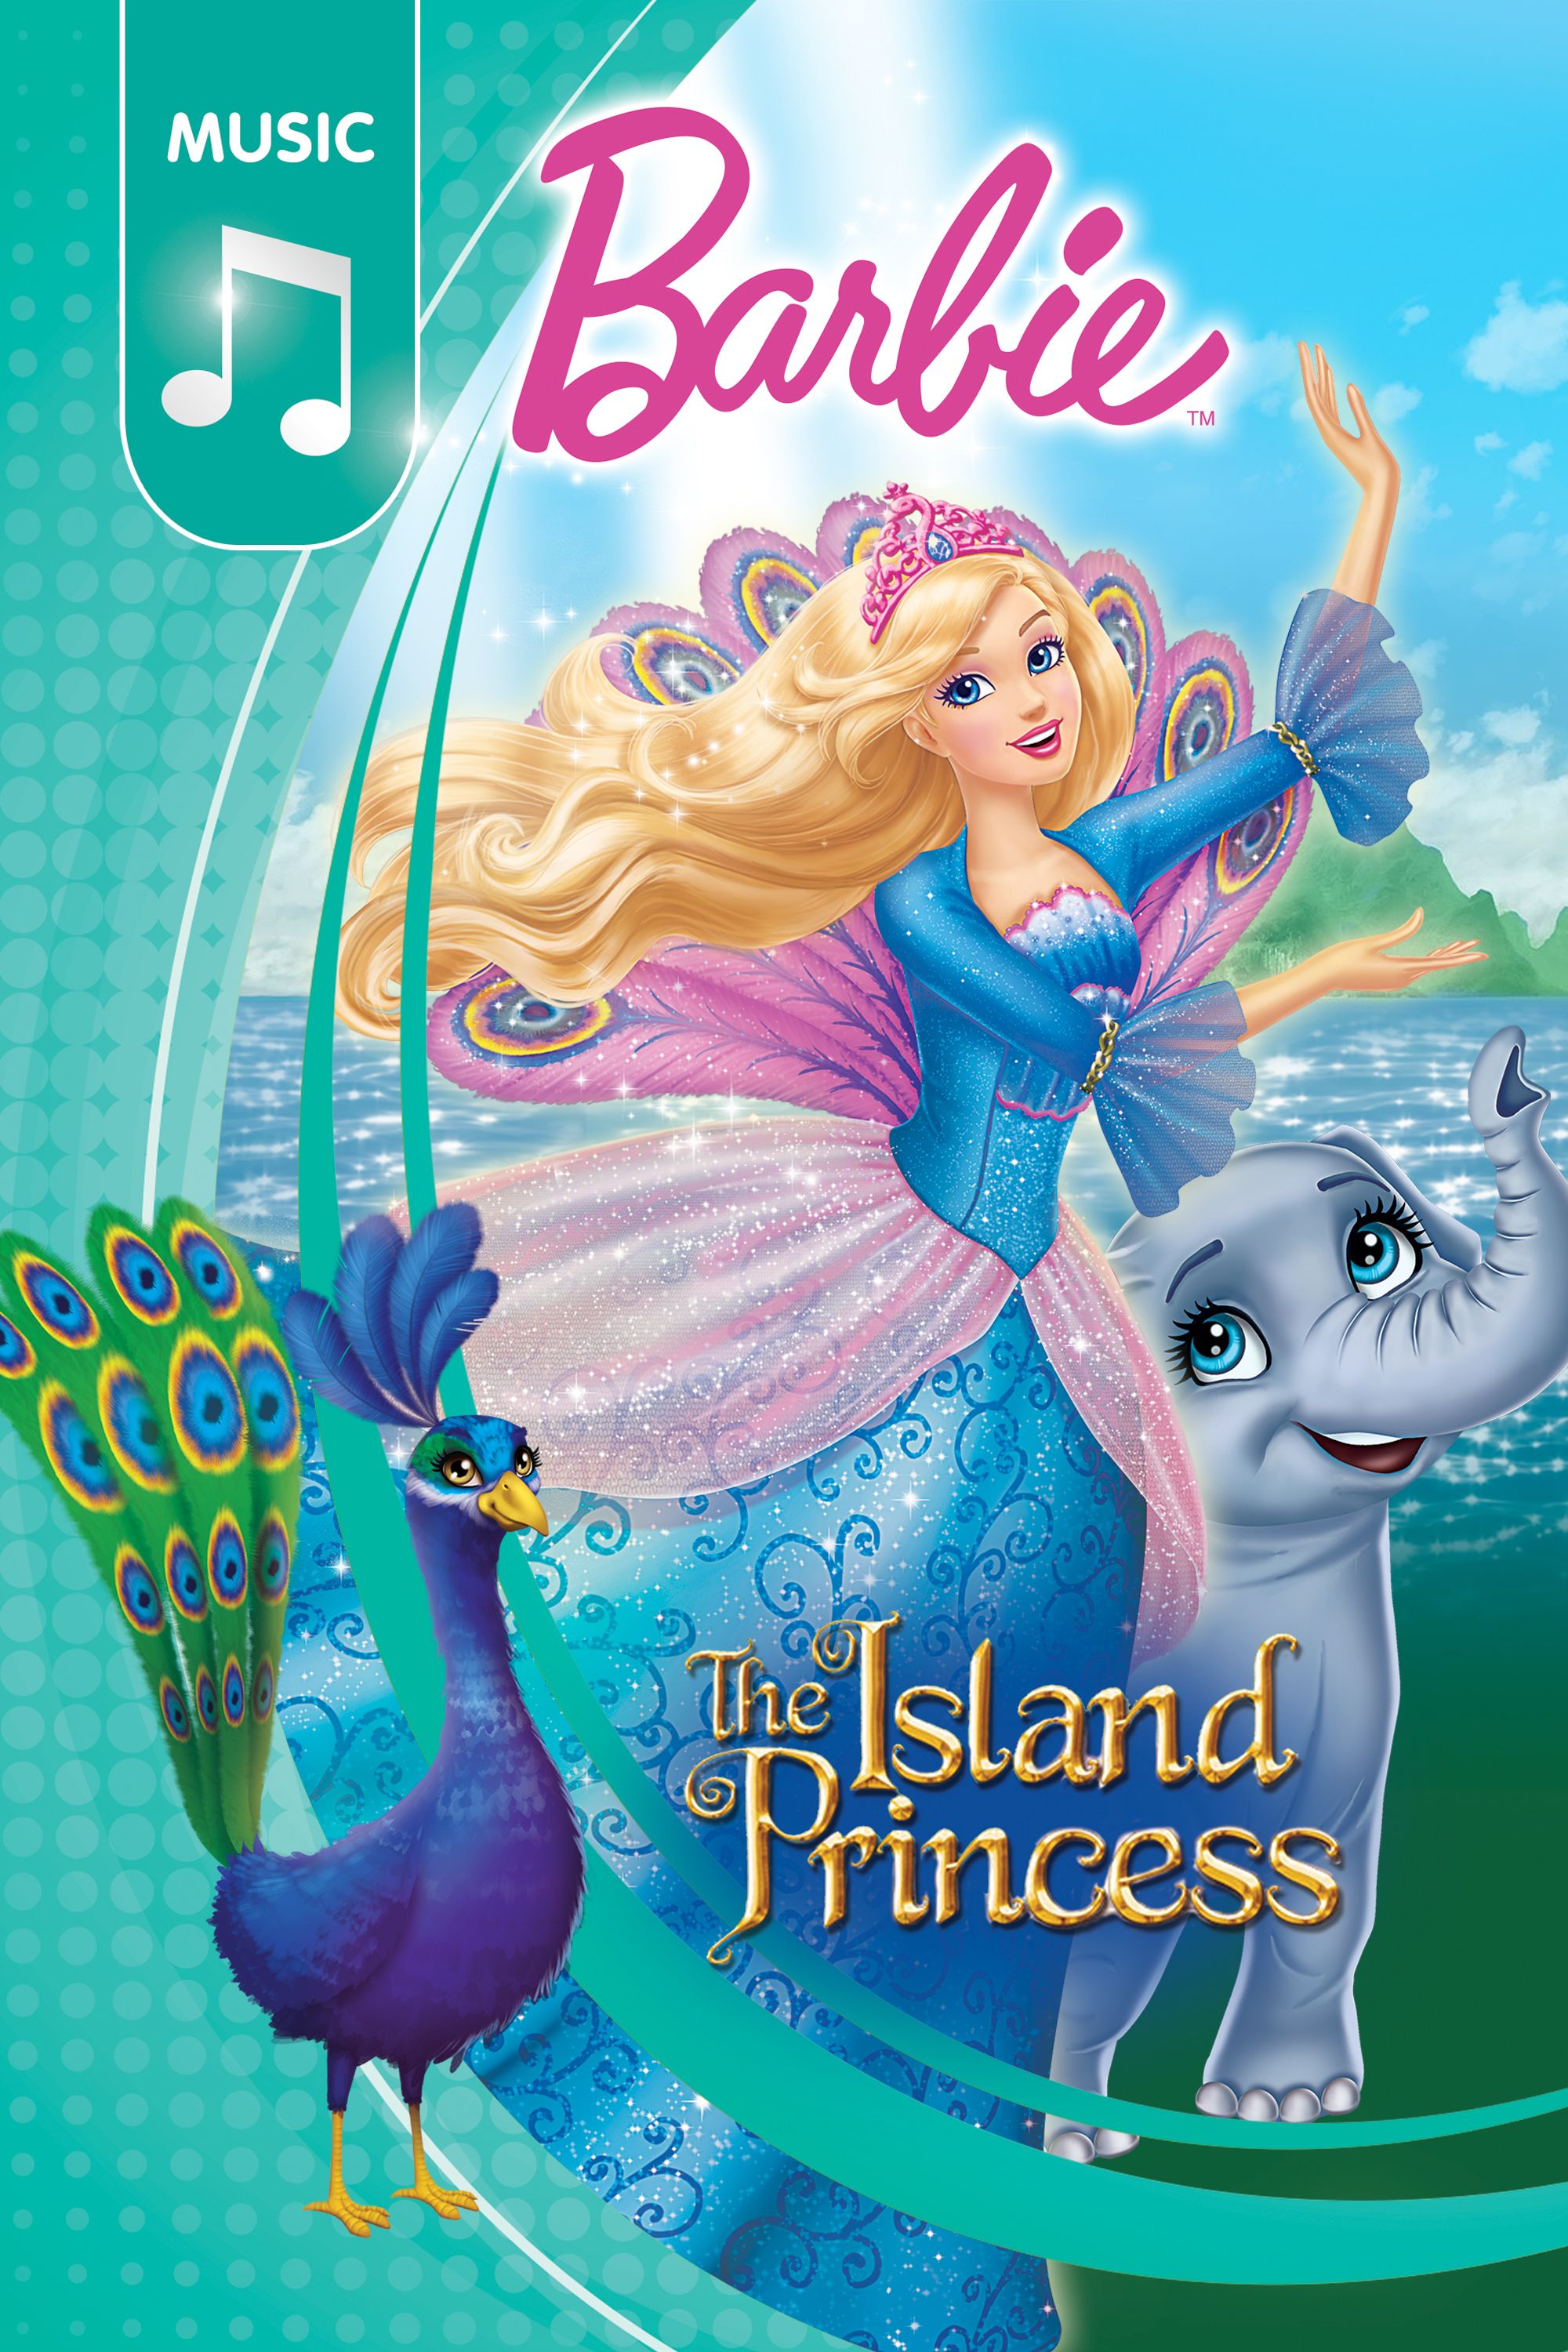 Barbie As The Island Princess Full Movie - slidesharetrick